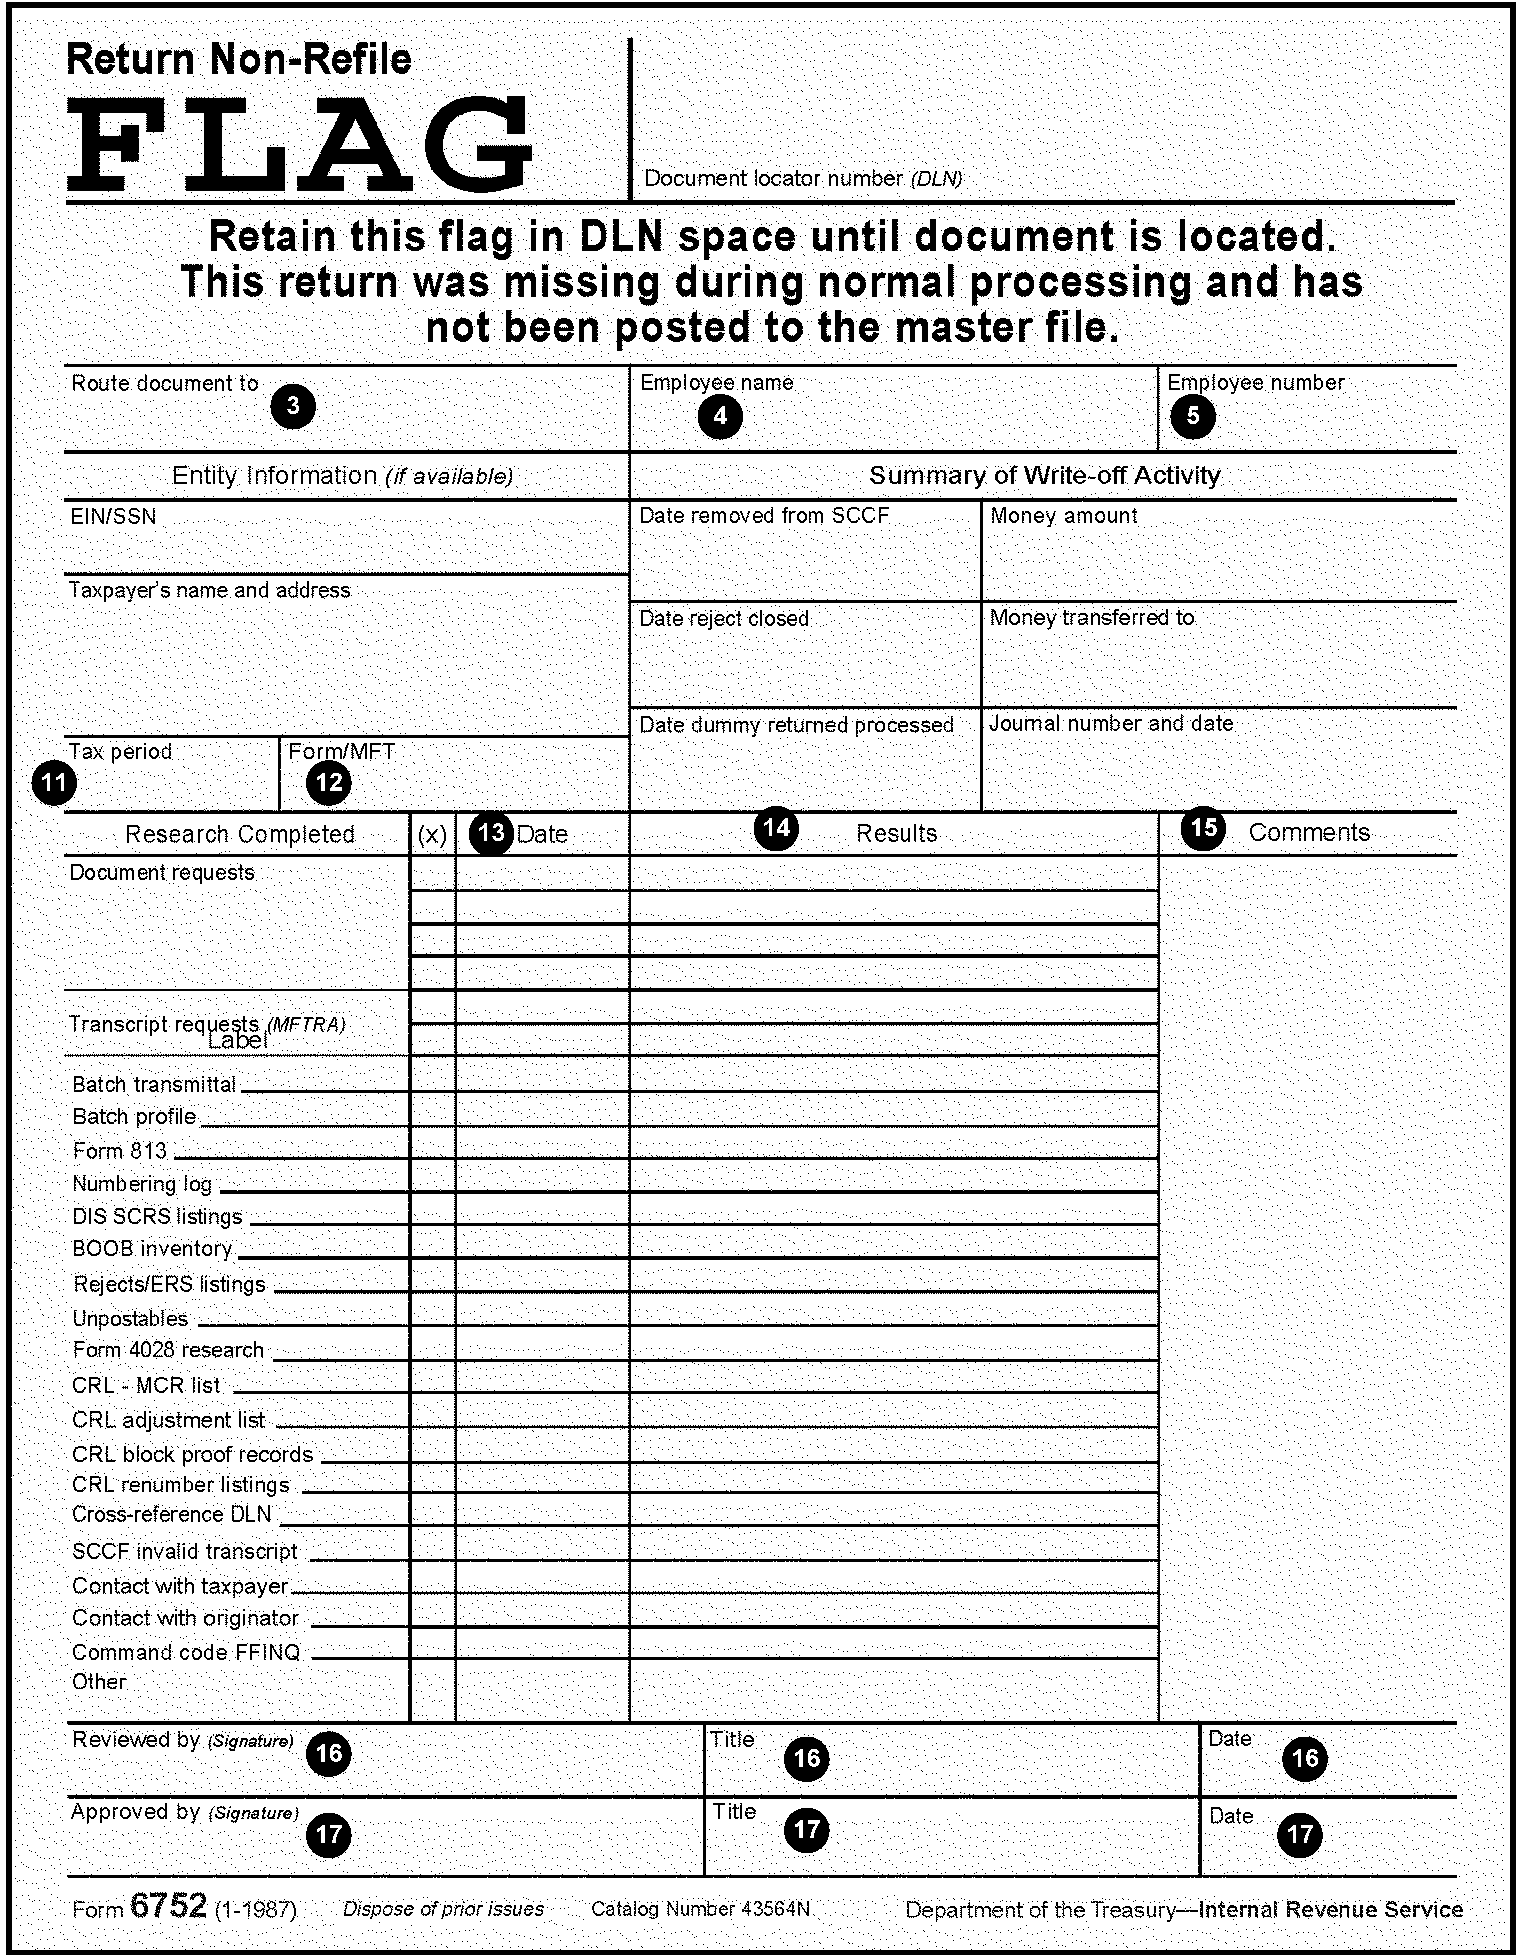 form-8822-autofill-pdf